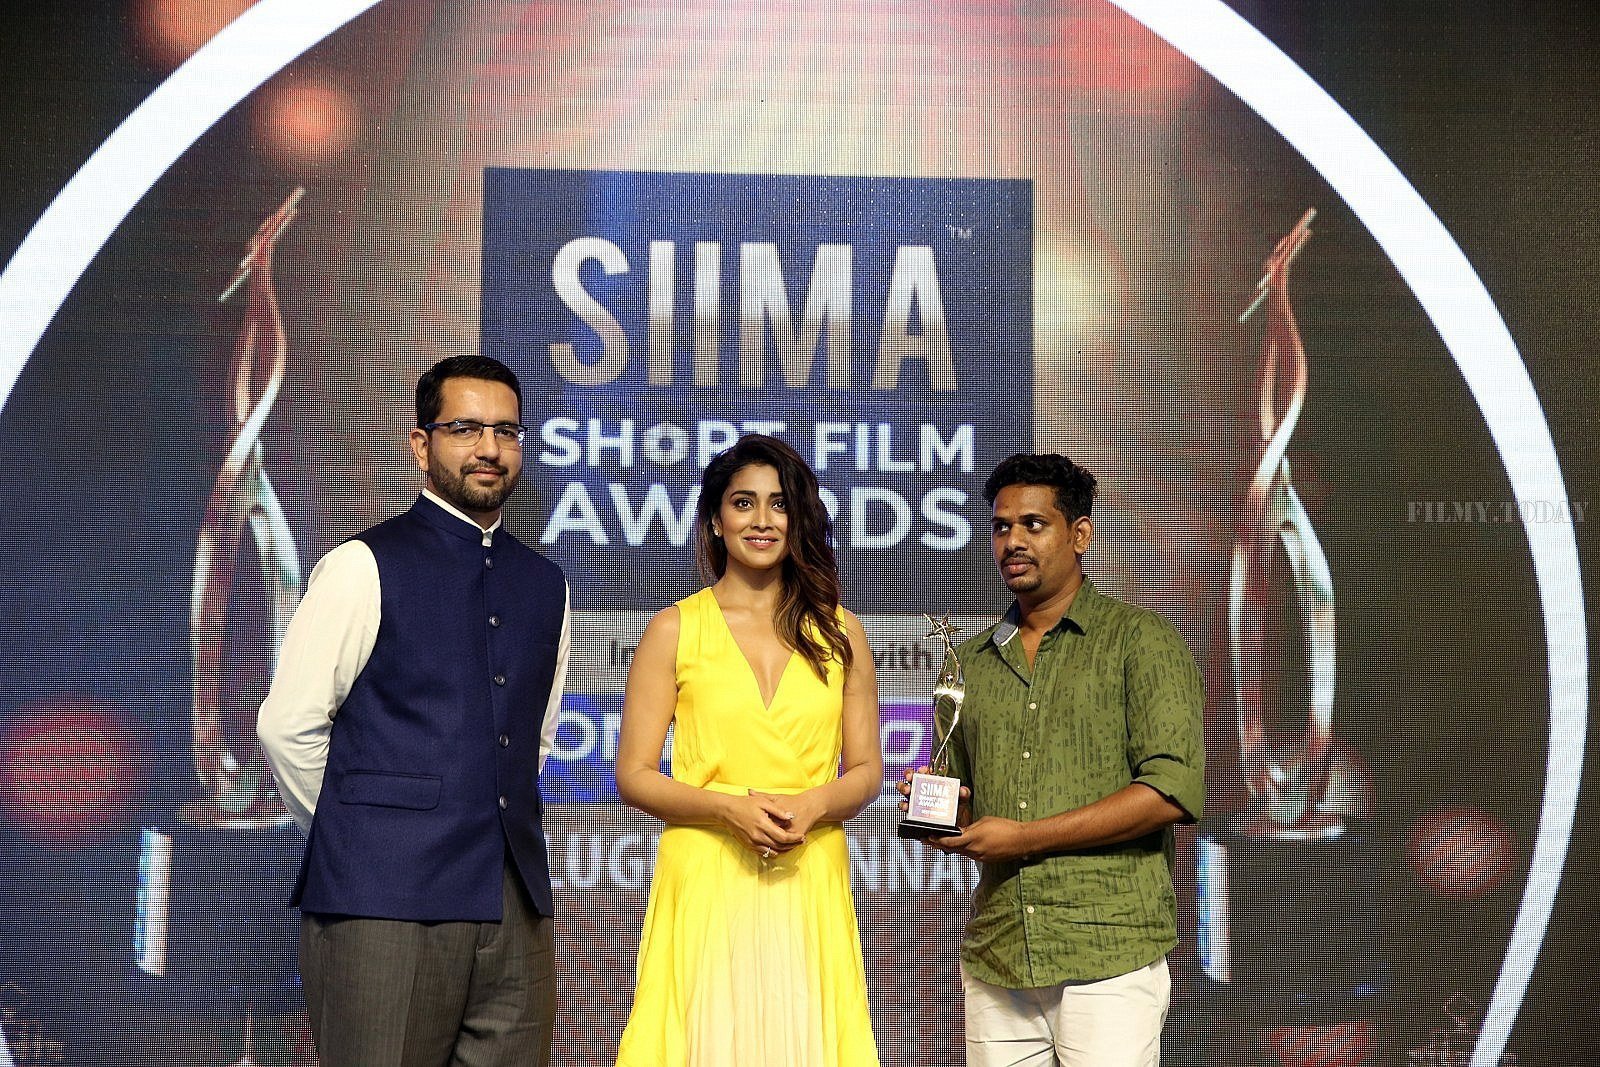 SIIMA Awards 2019 Curtain Raiser Event Photos | Picture 1666791